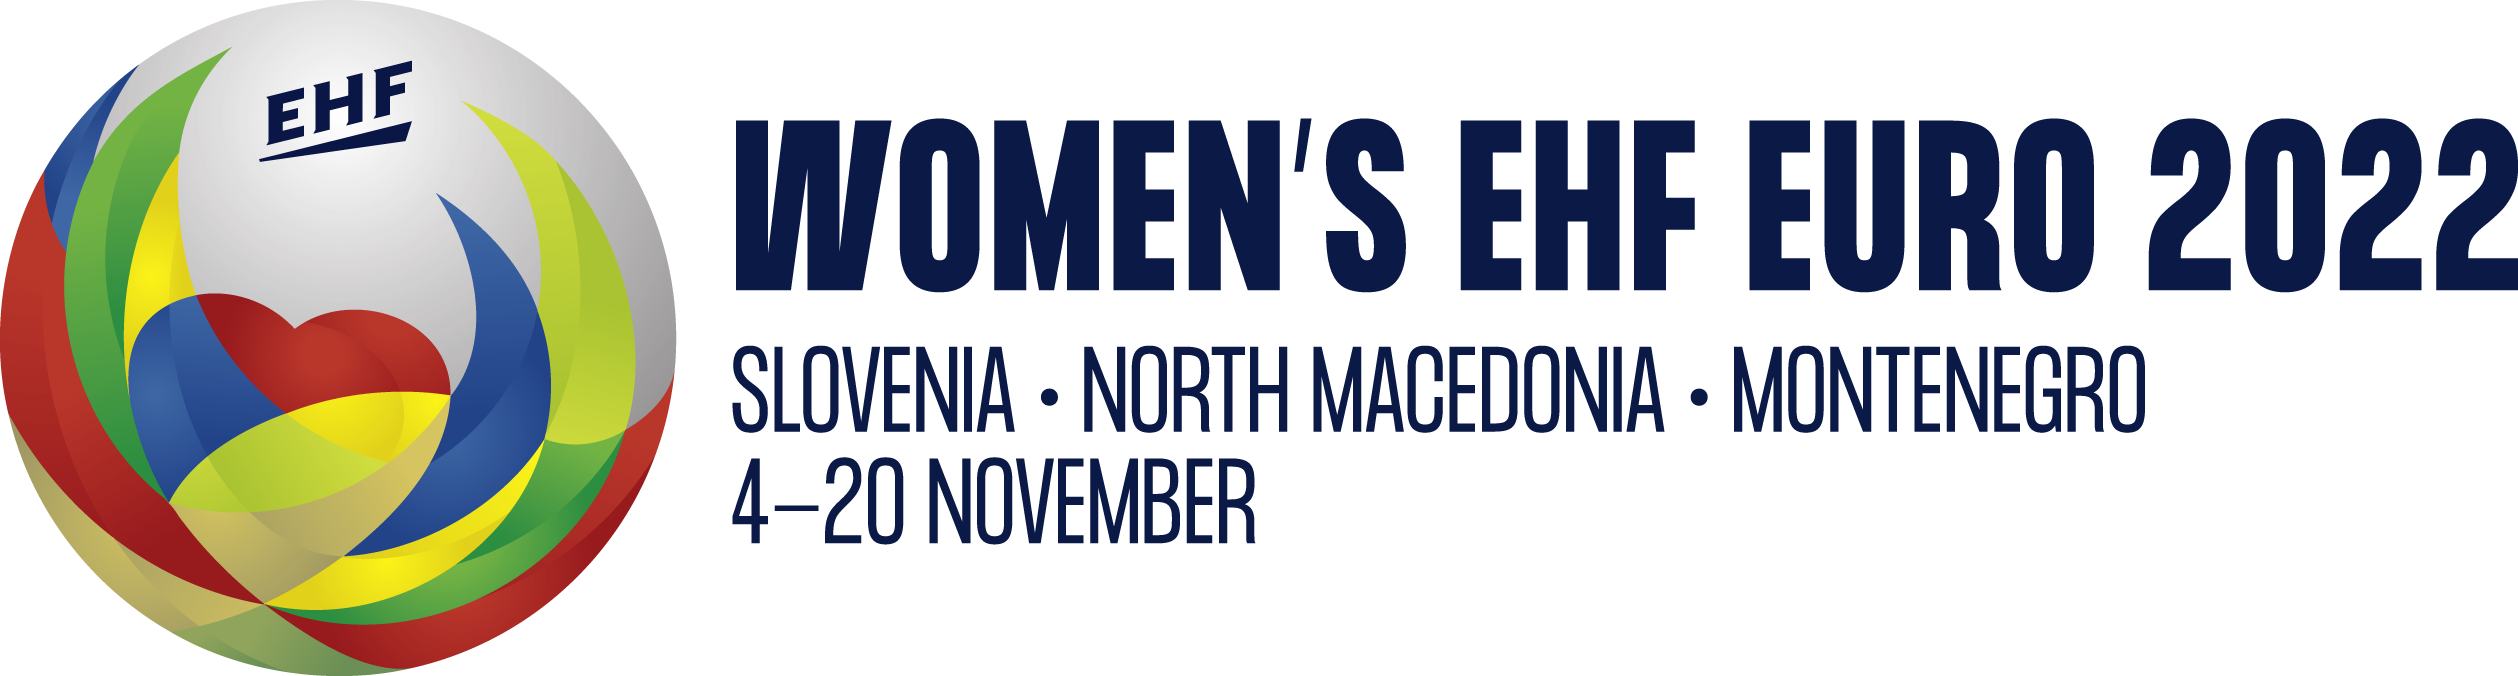 Women's EHF EURO 2022